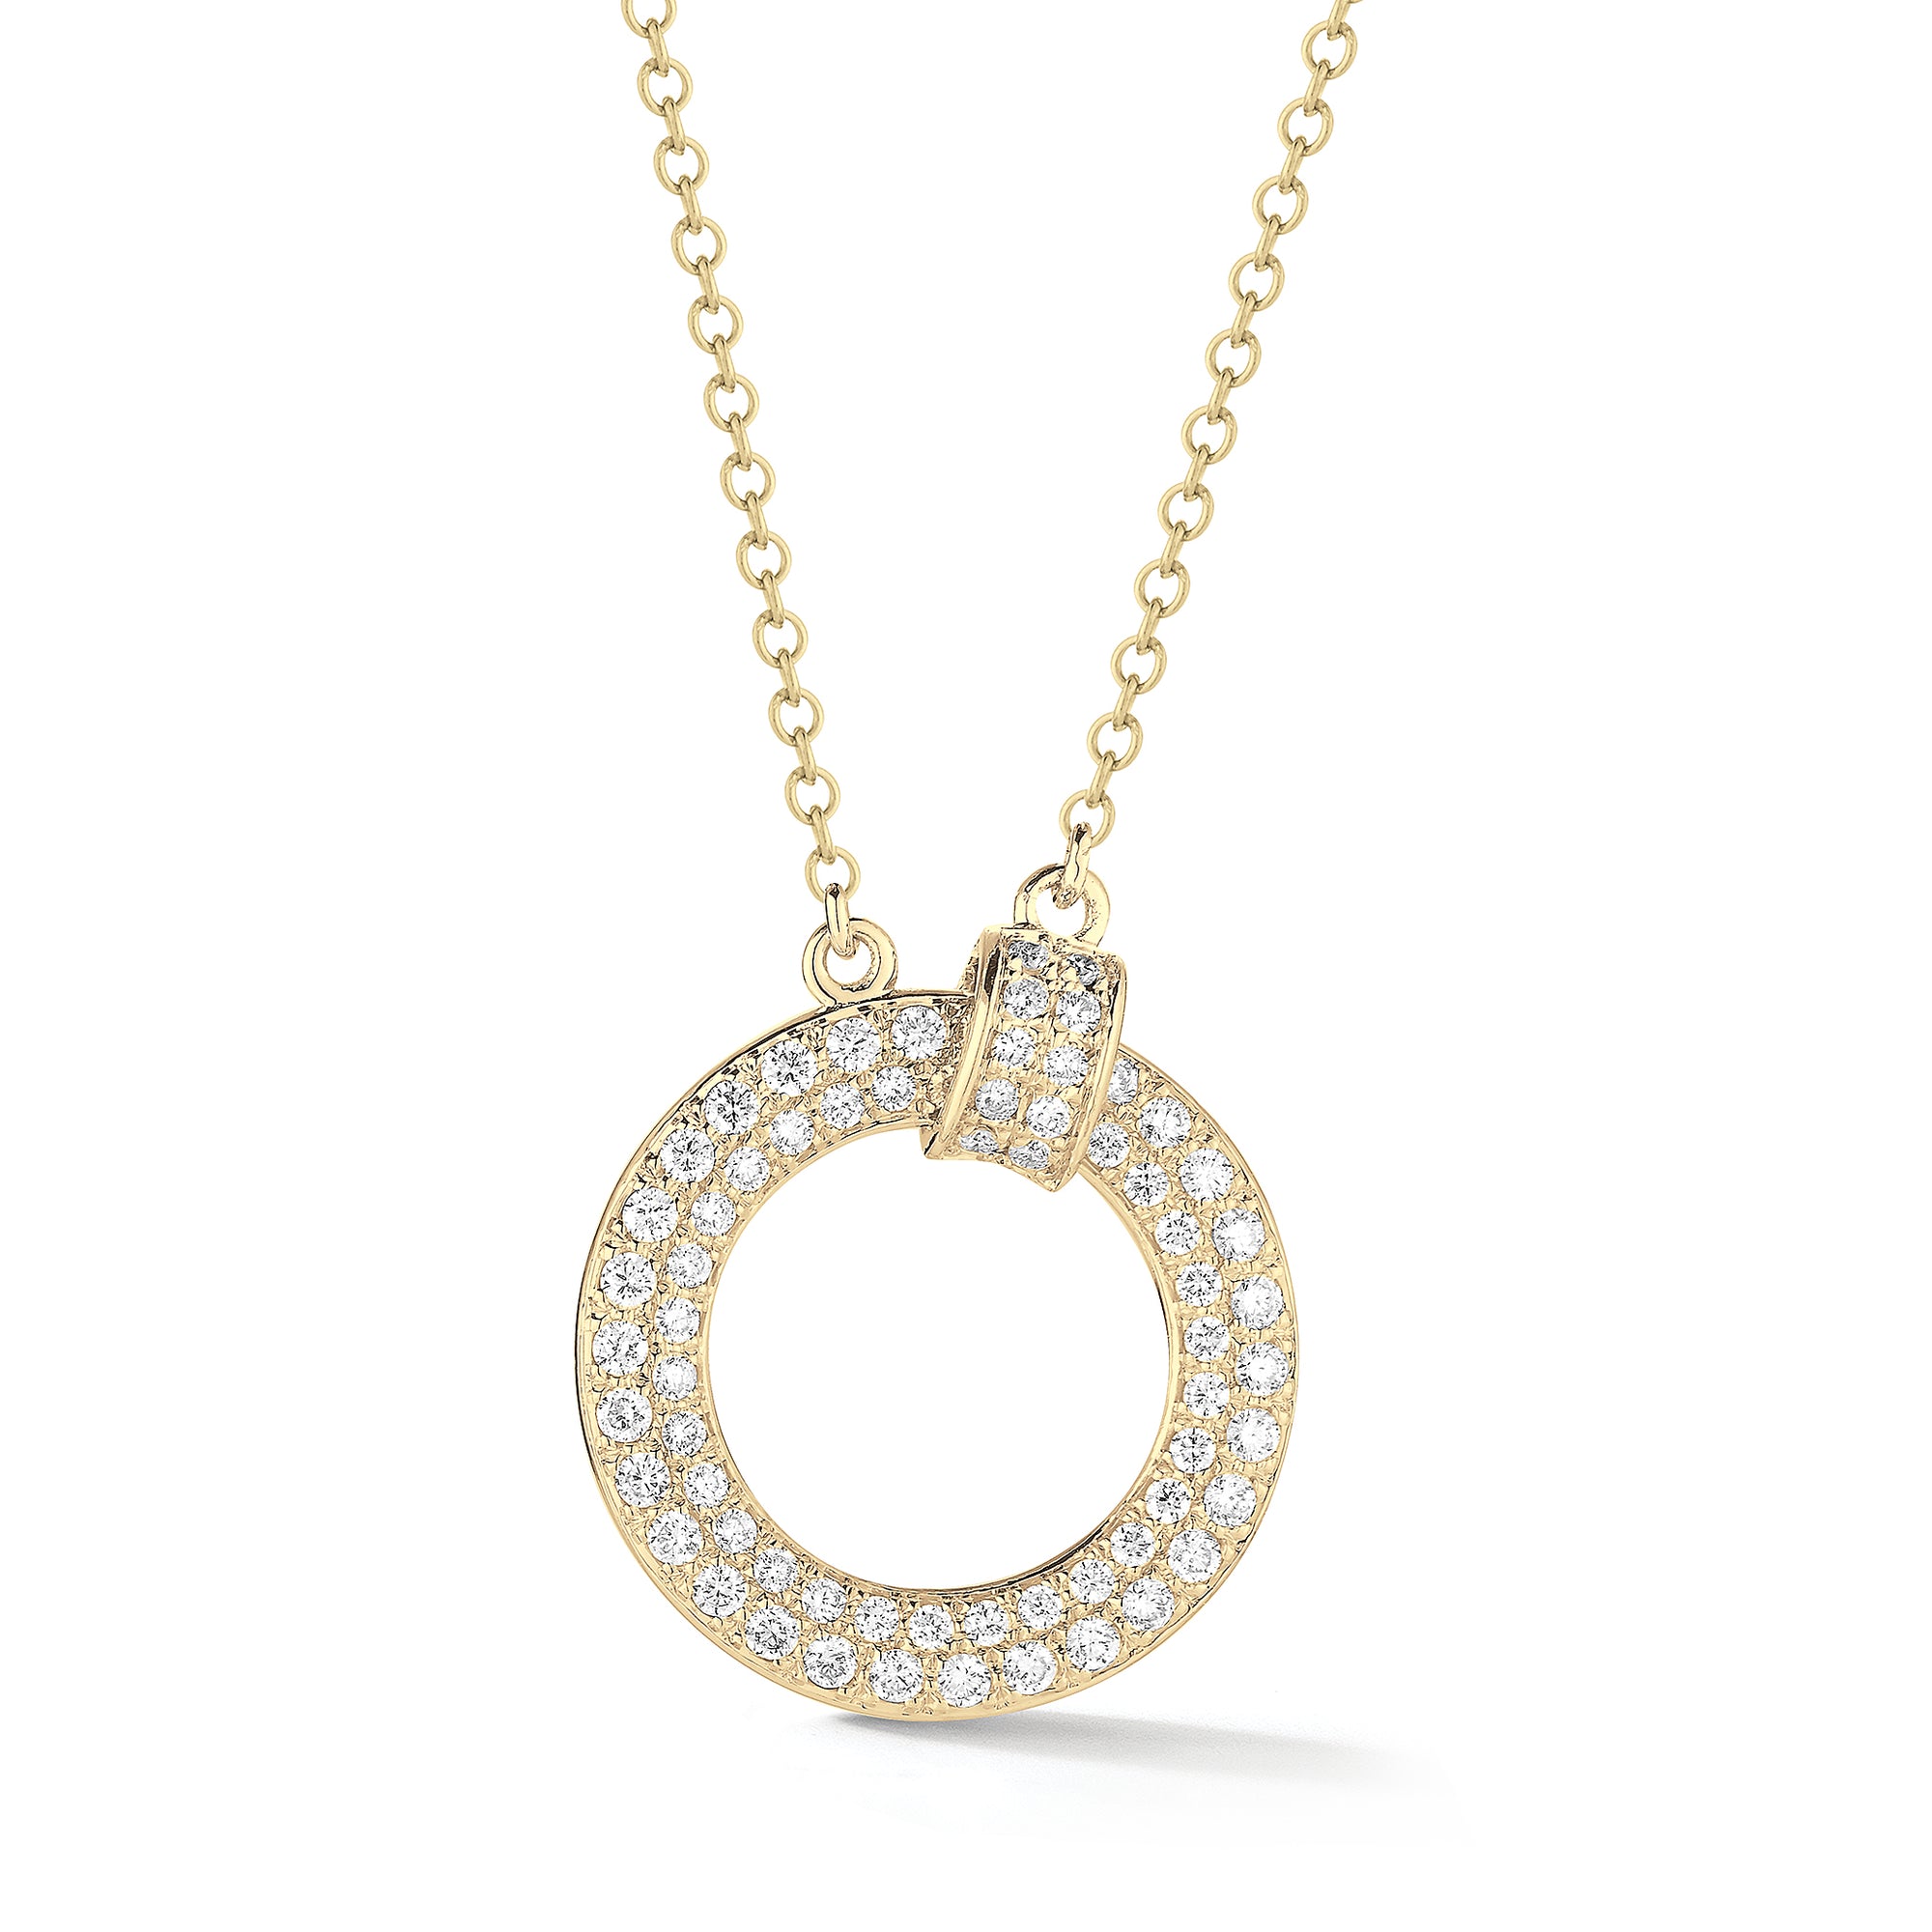 Pave Diamond Open Circle Link Pendant  14k gold, 4.5 grams, 70 round pave-set diamonds weighing .66 carats.